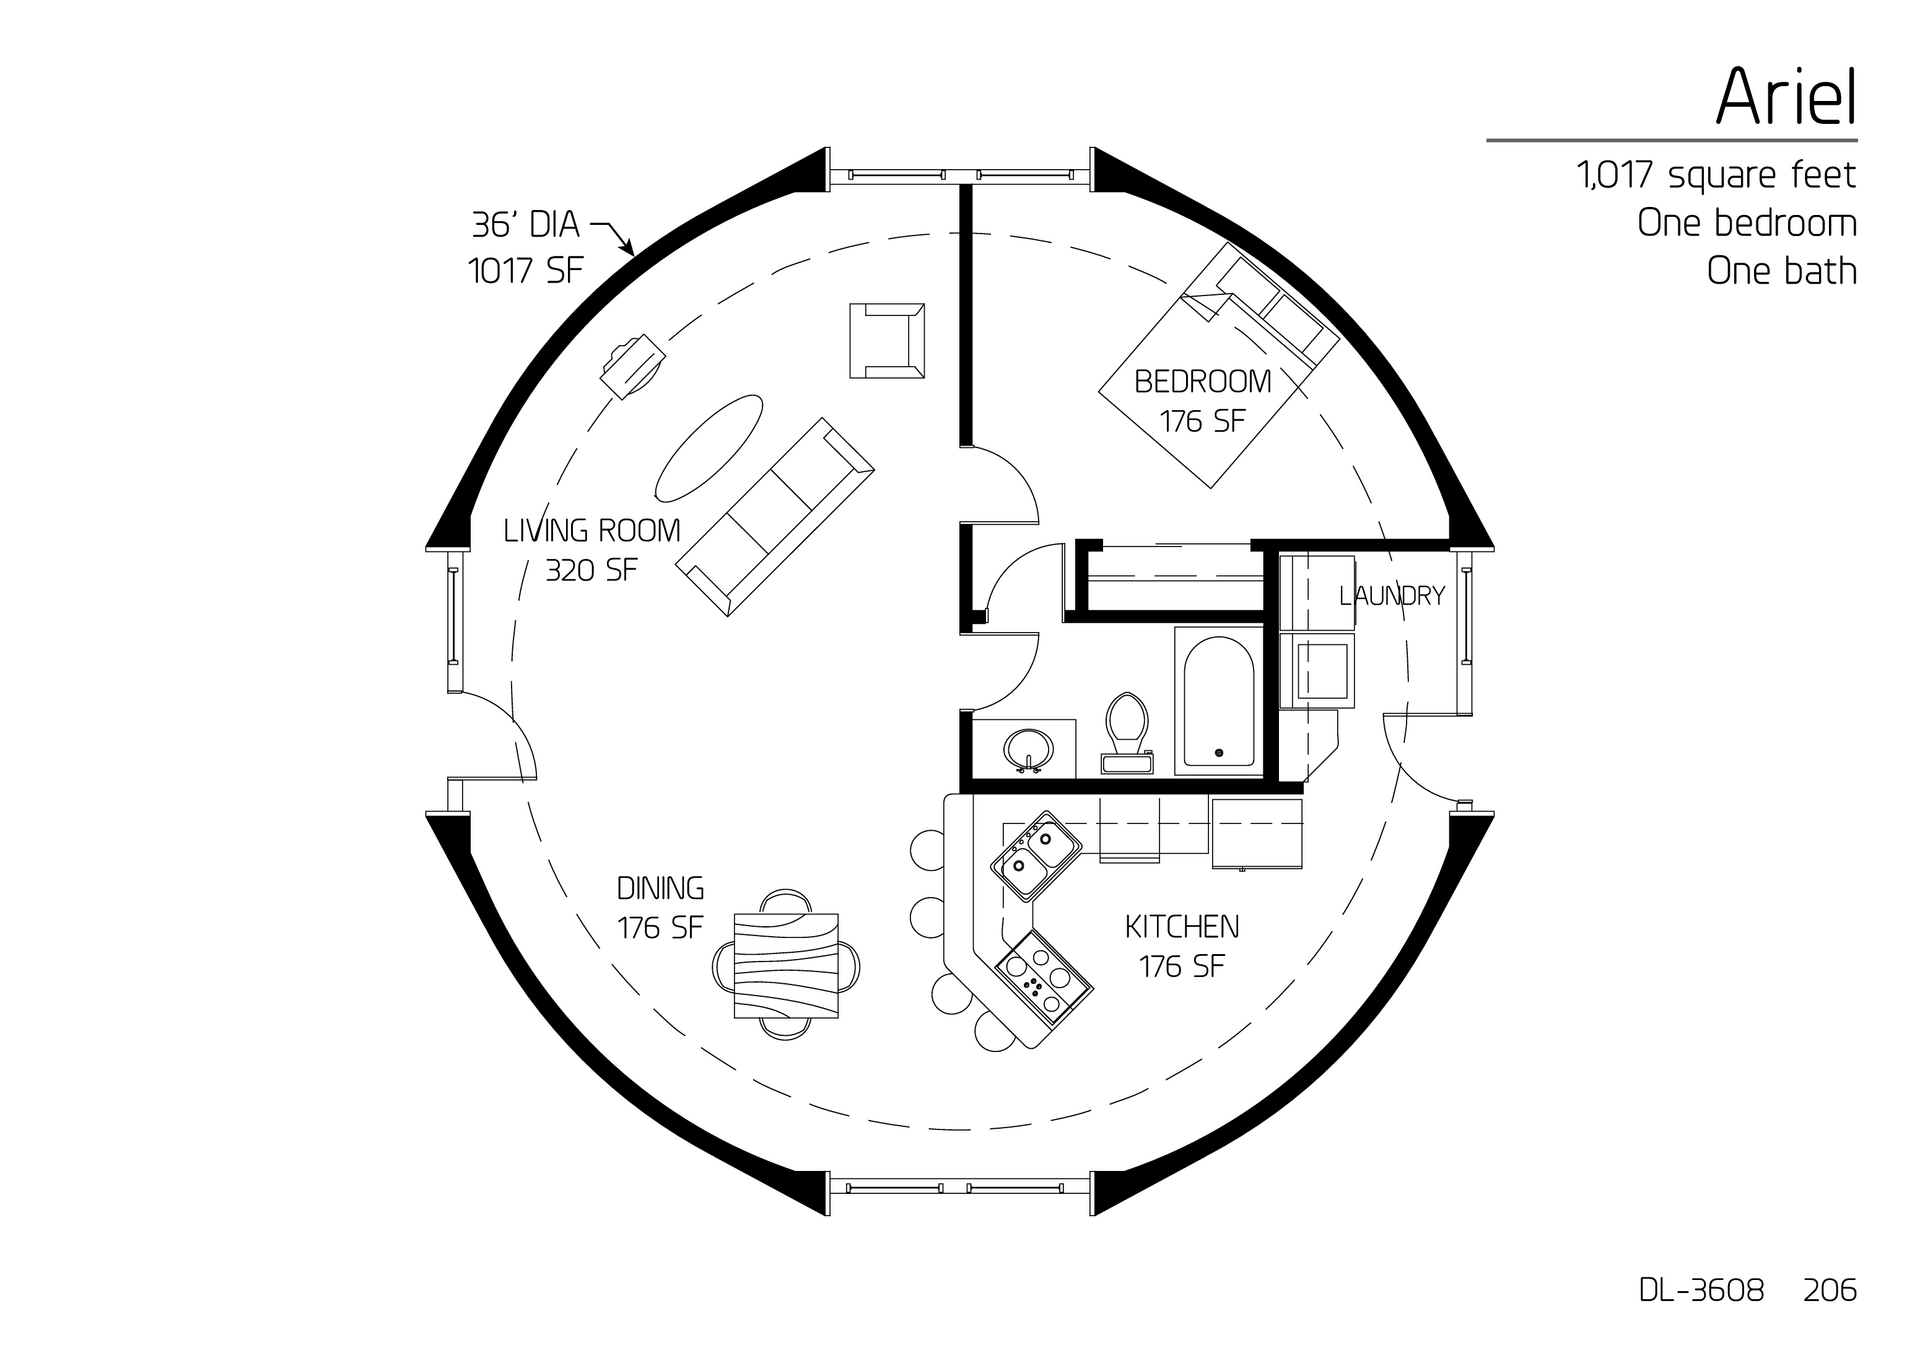 Ariel: A 36' Diameter, 1017 SF, One-bedroom, One-Bath Floor Plan.